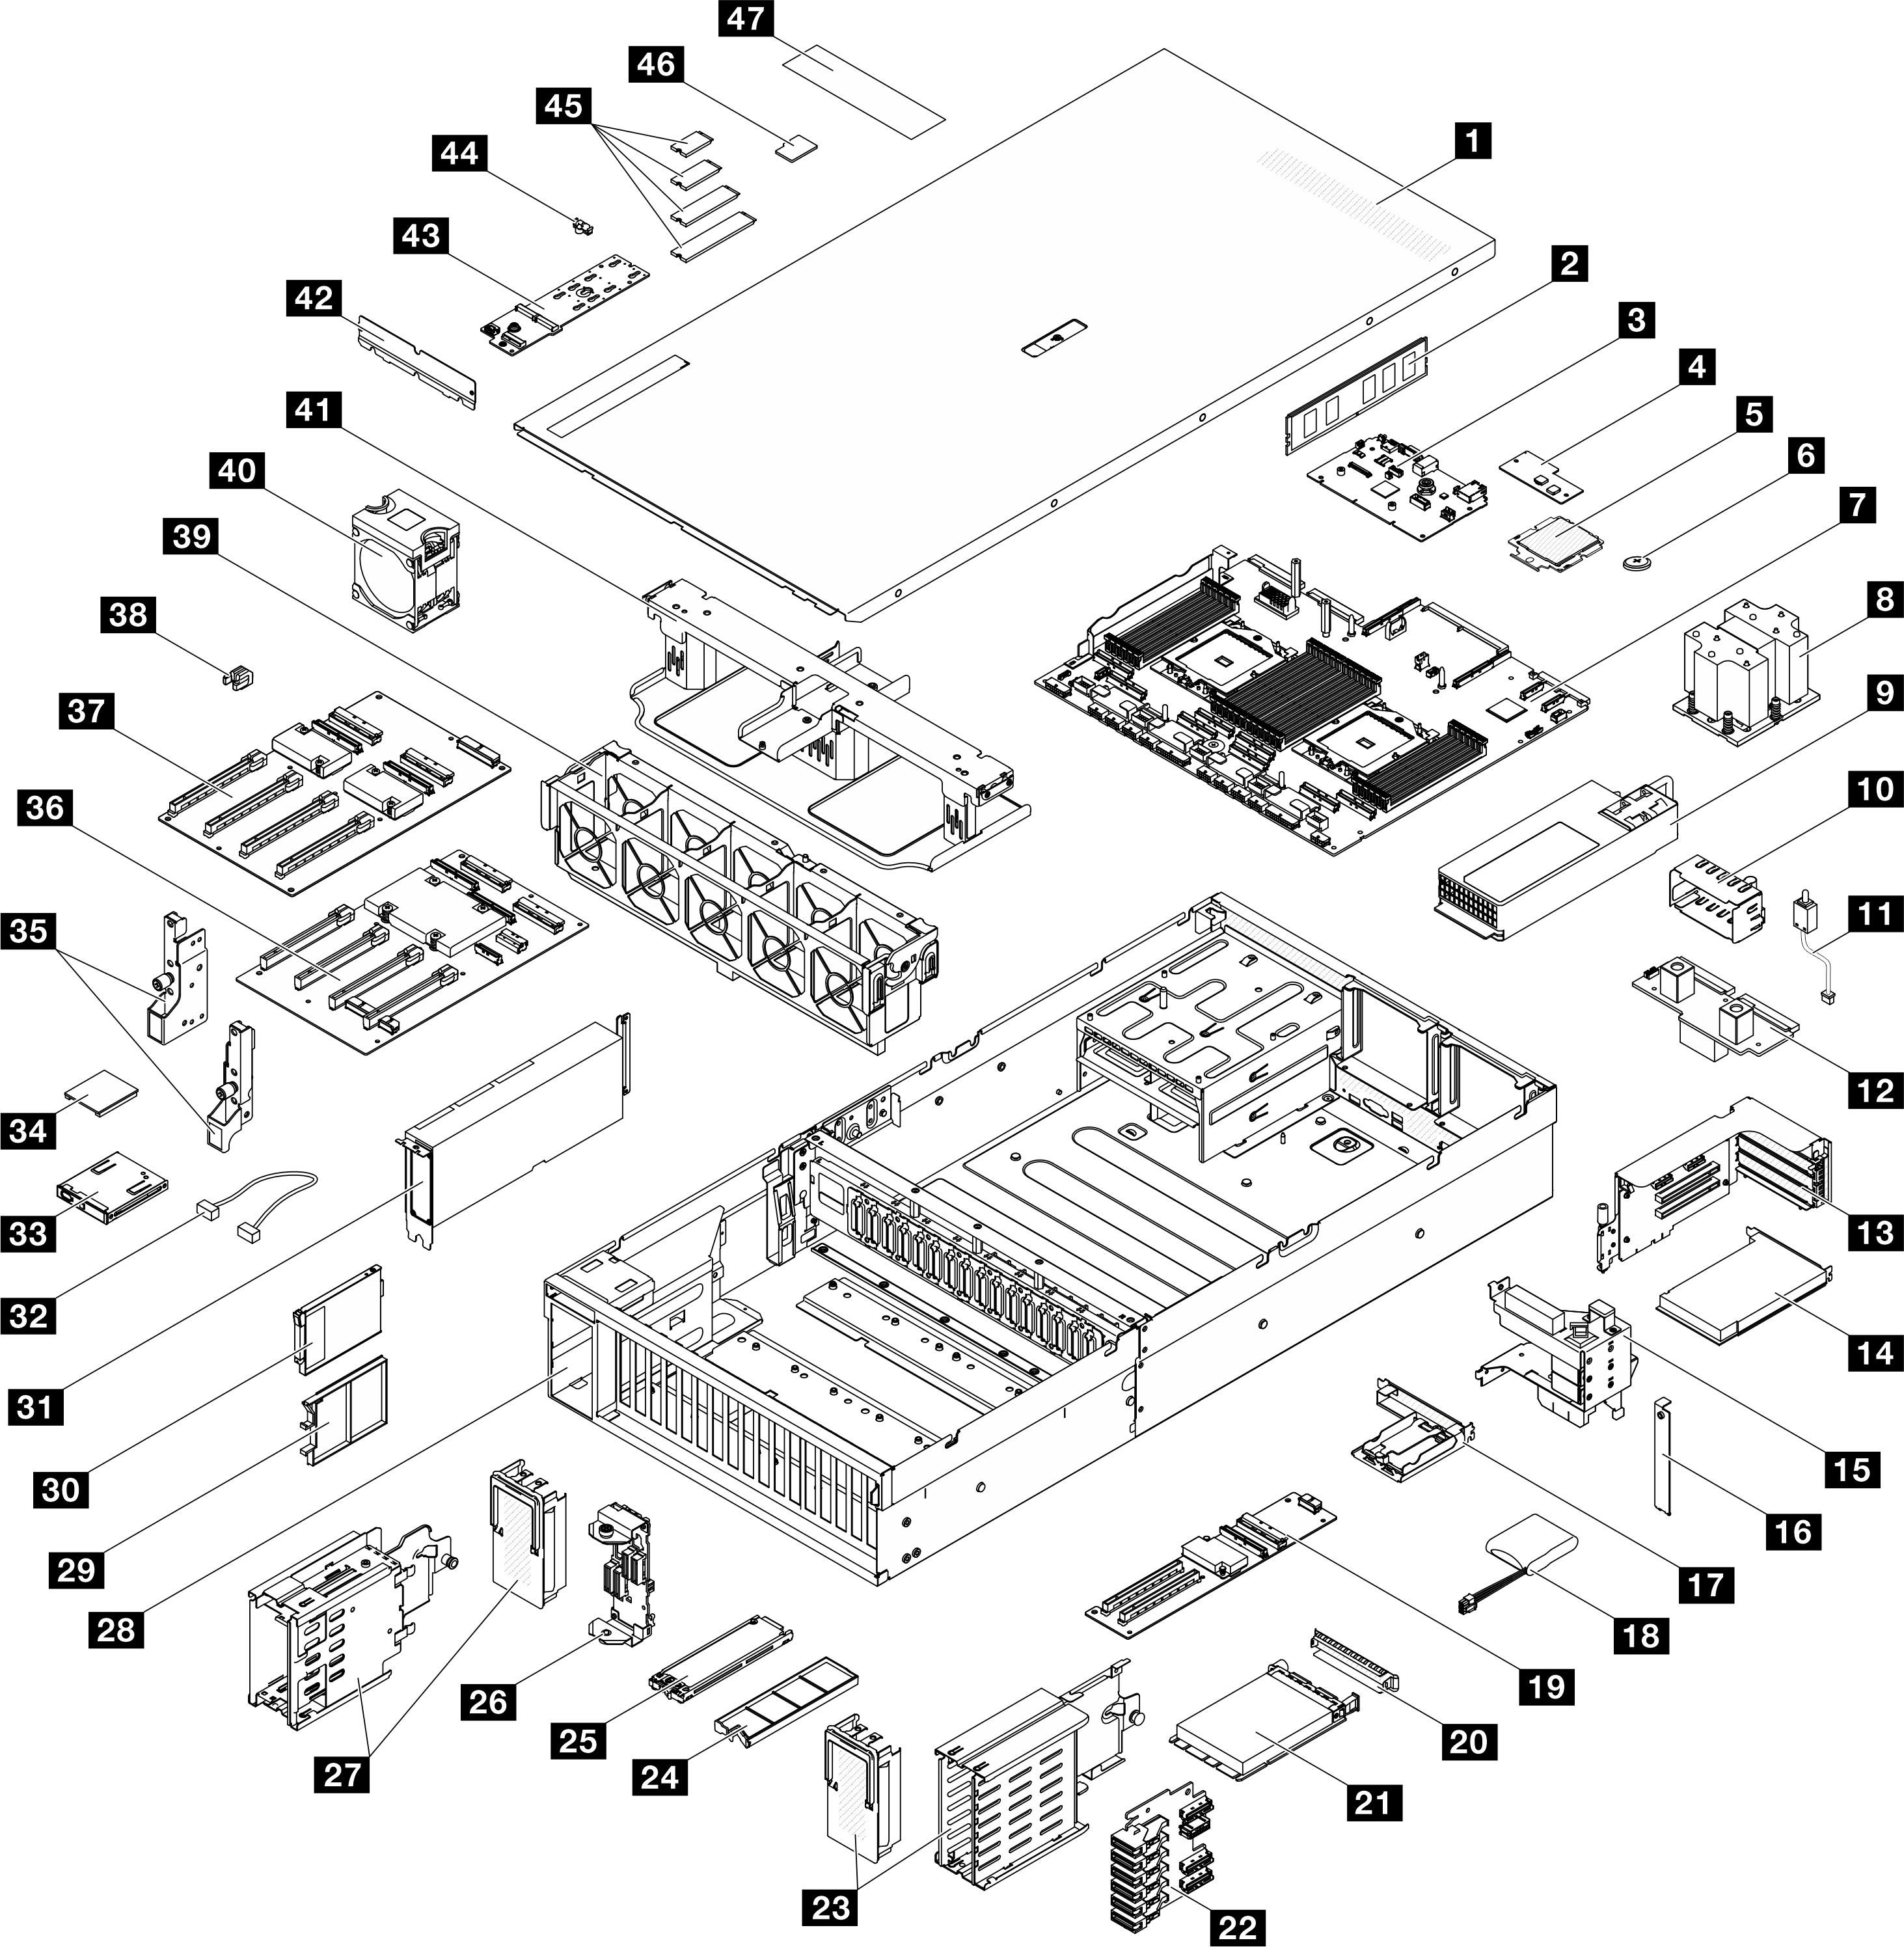 Server components of the 8-DW GPU 型号